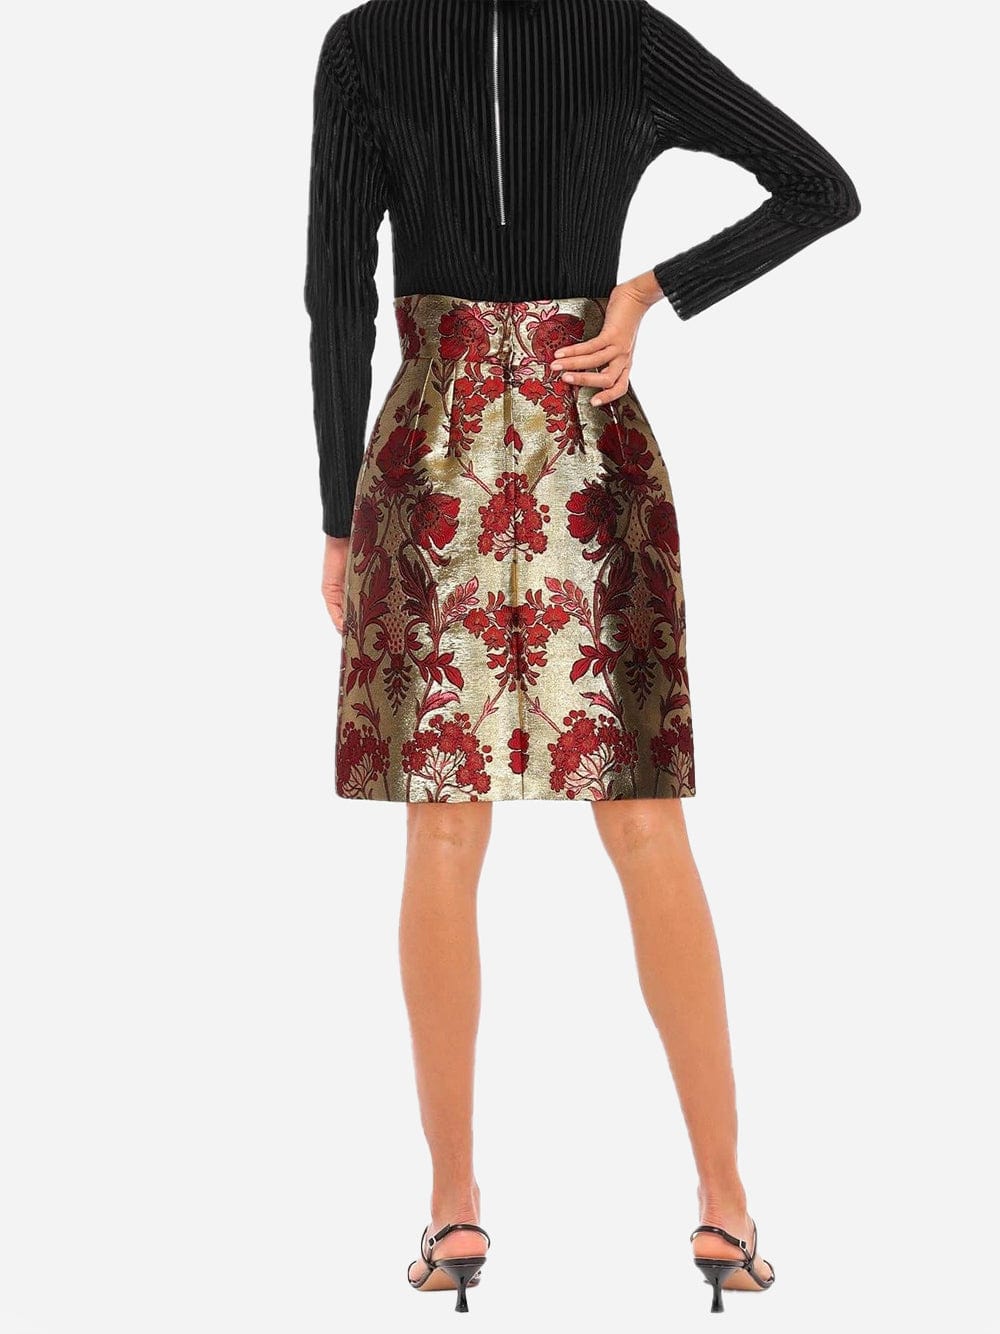 Dolce & Gabbana Jacquard Floral Skirt